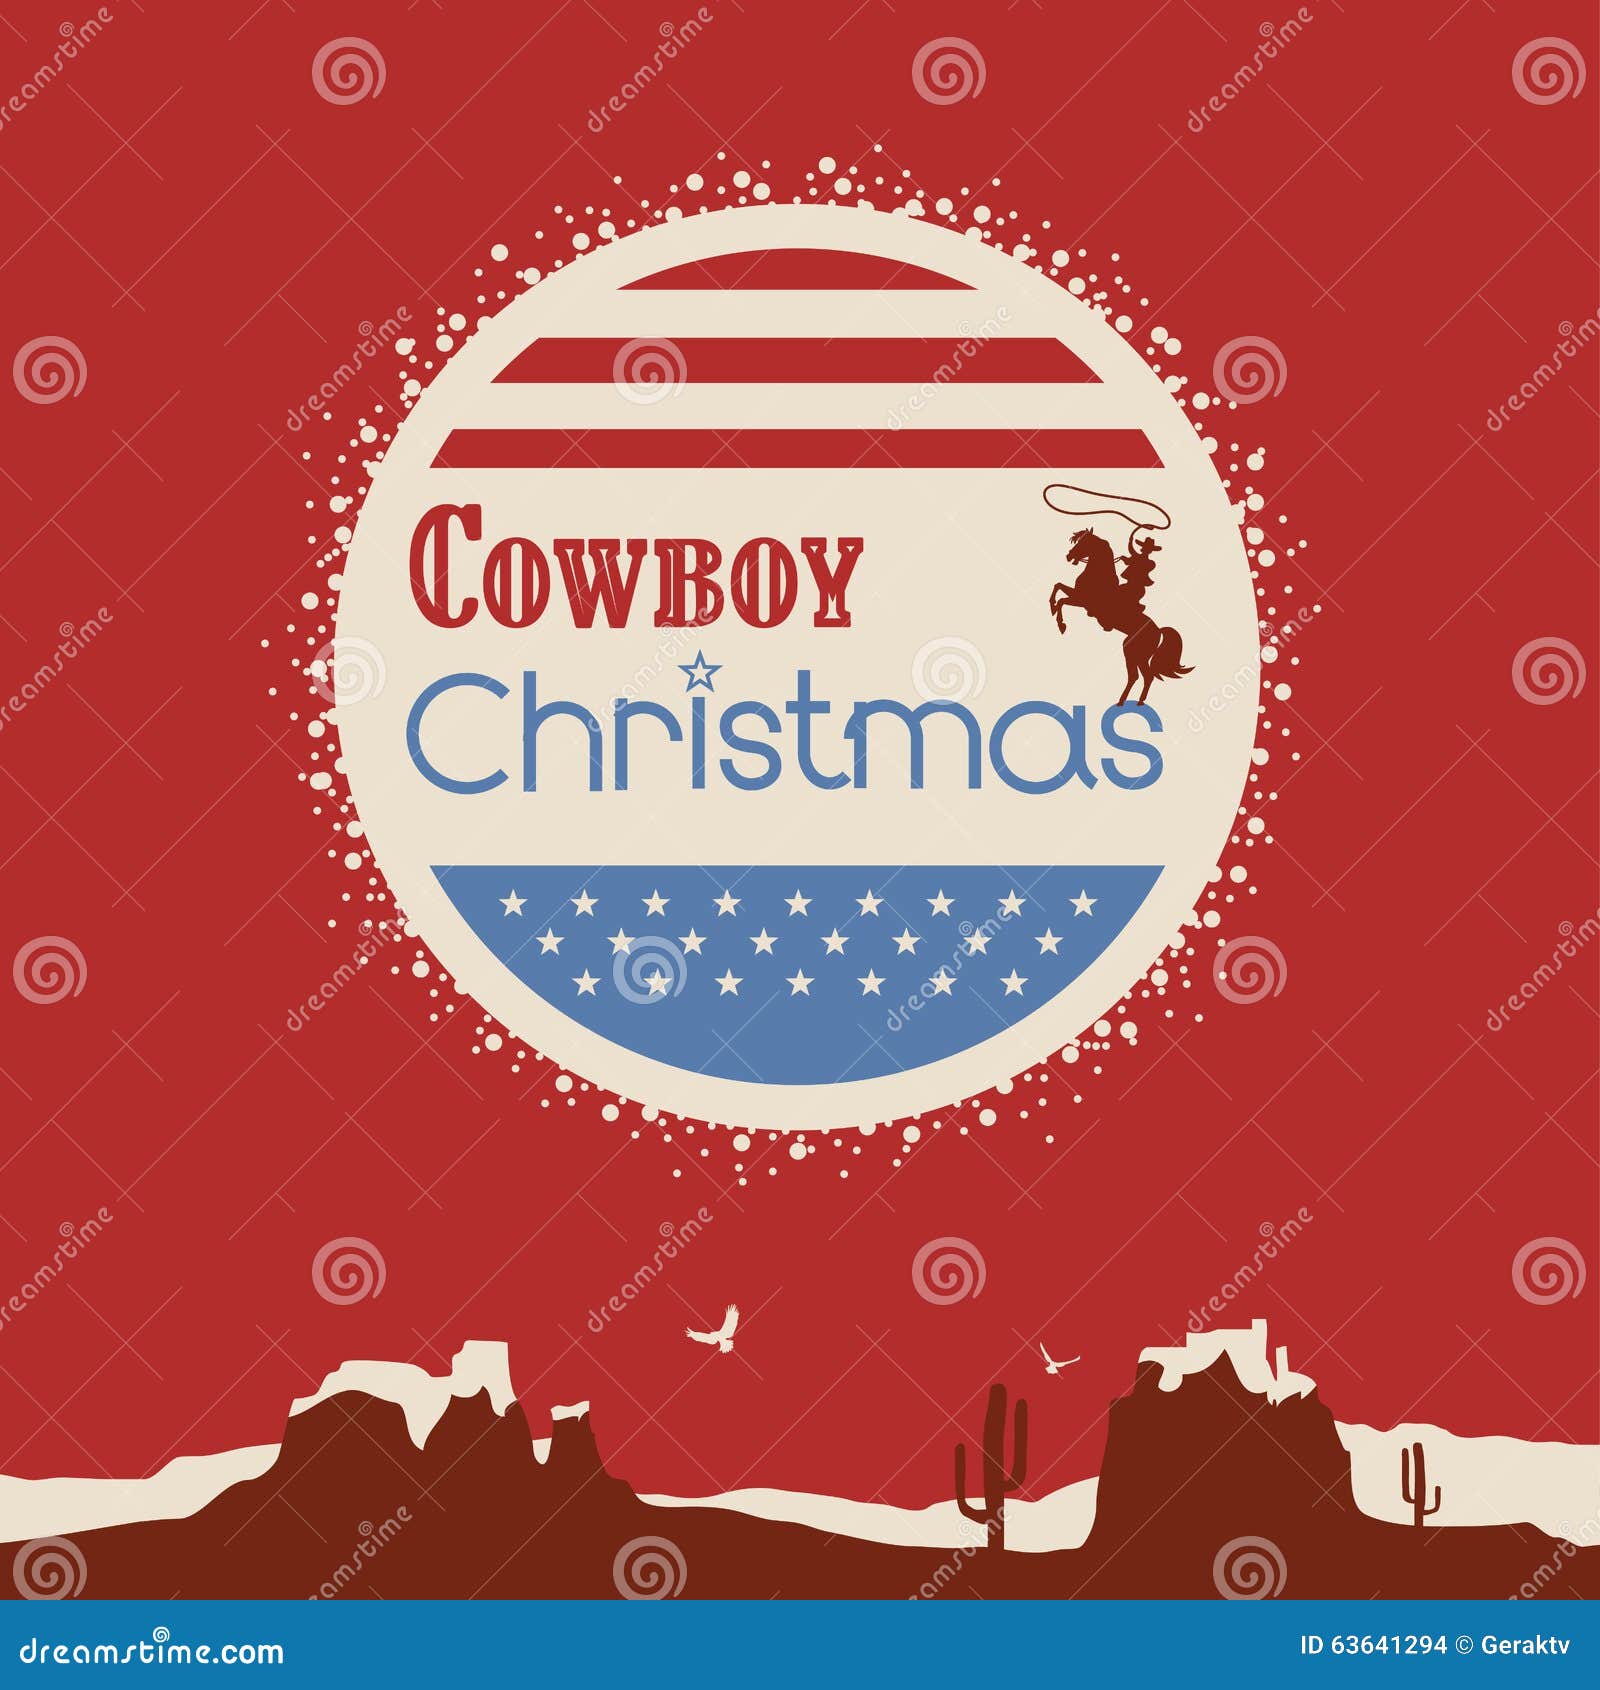 American Cowboy Christmas Poster Stock Vector Illustration of symbol